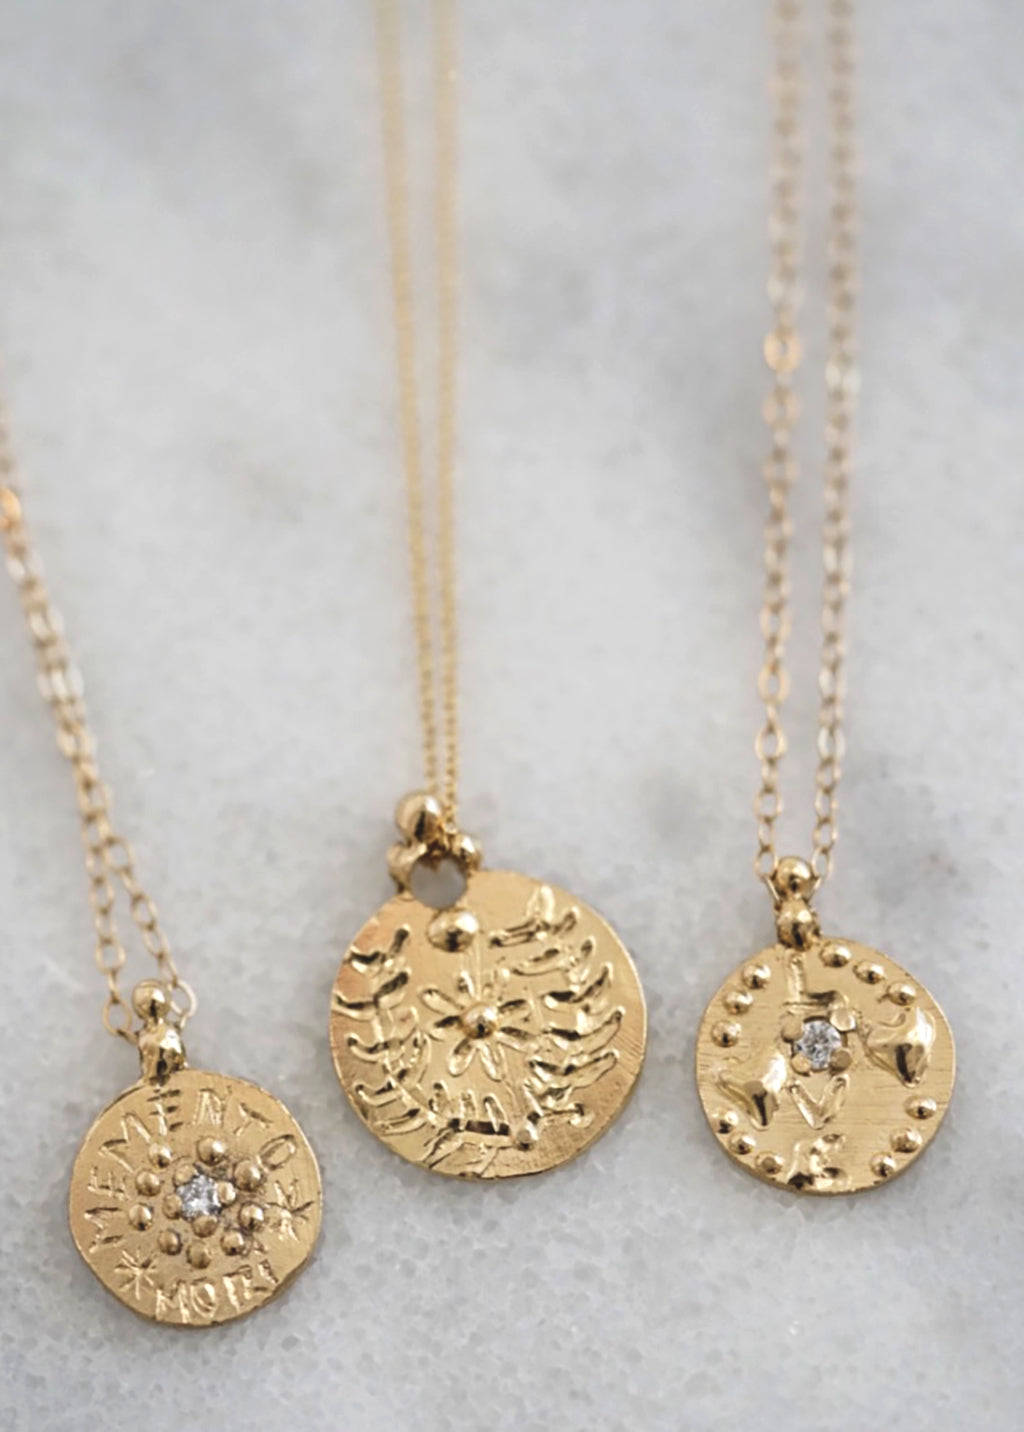 Memento Mori Necklace gold with diamond